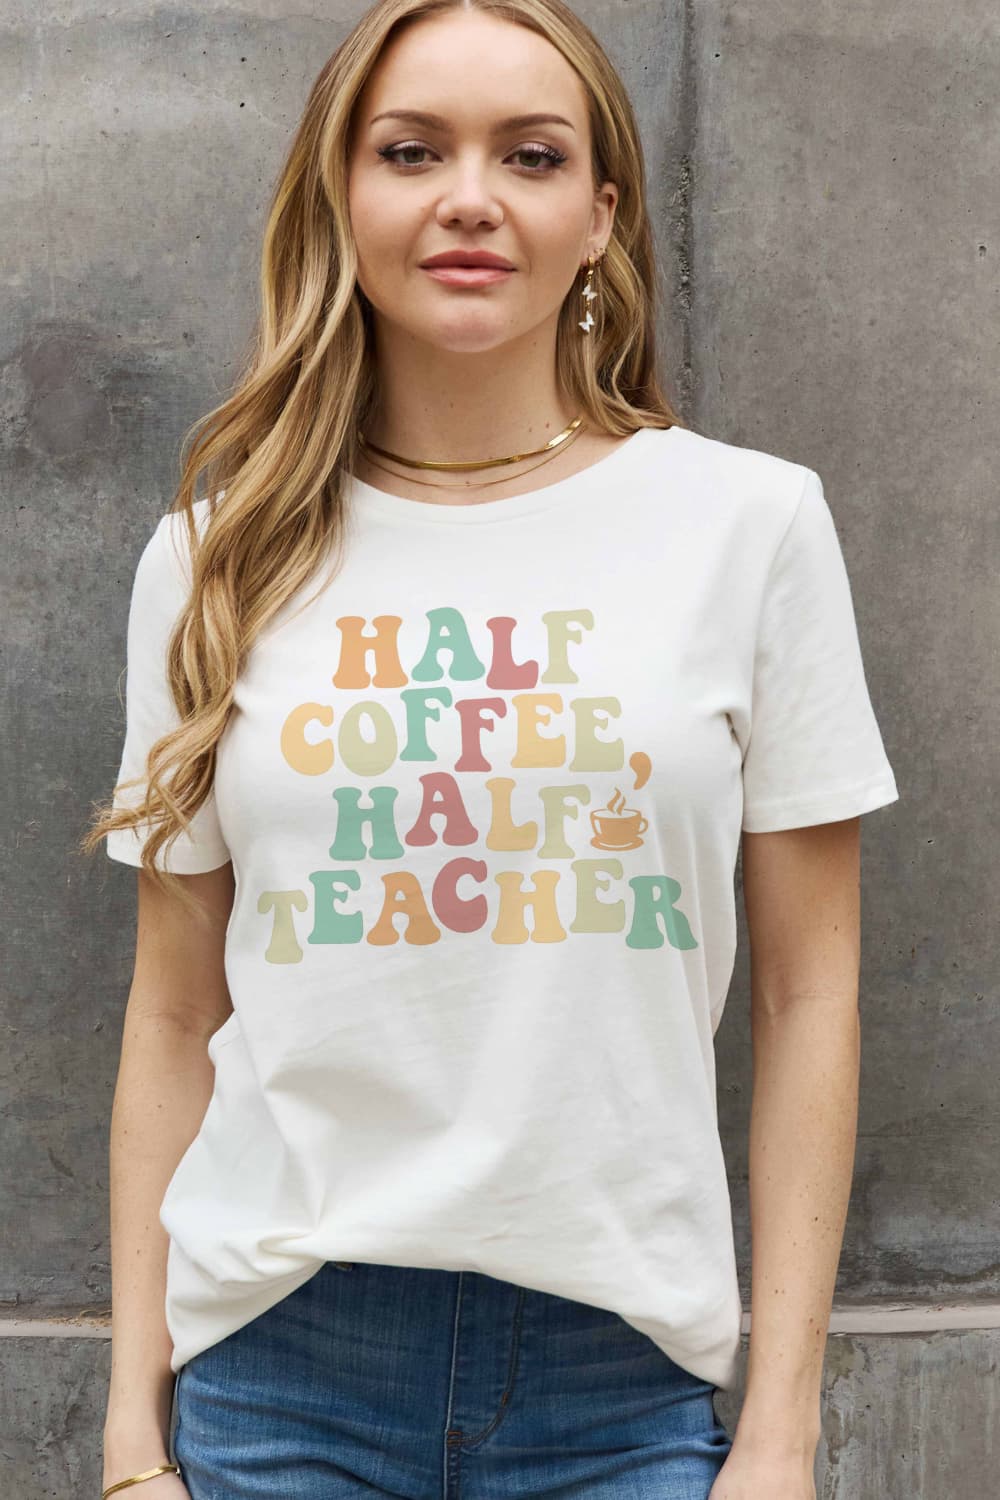 Simply Love Full Size HALF COFFEE HALF TEACHER Graphic Cotton Tee - GemThreads Boutique